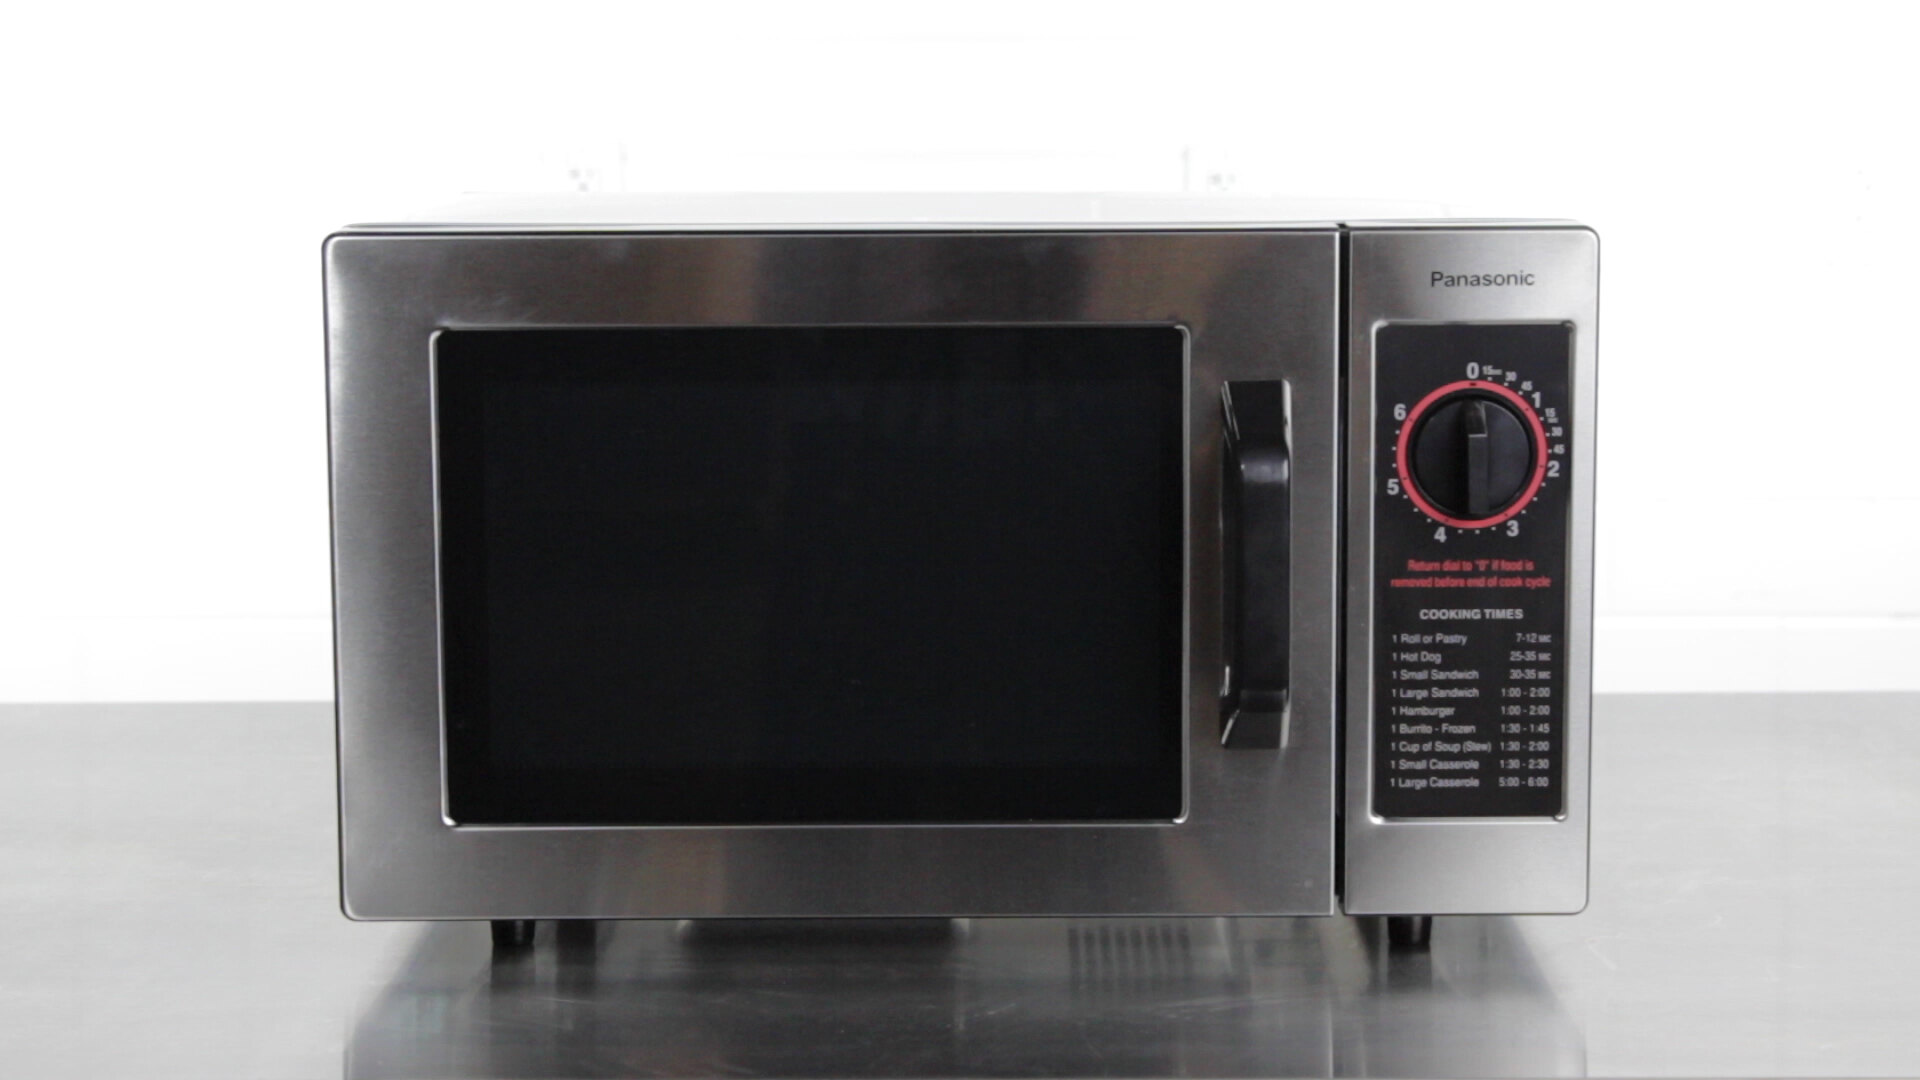 Amana Commercial 1200 Watt Heavy Duty Compact Microwave Oven | HDC12A2